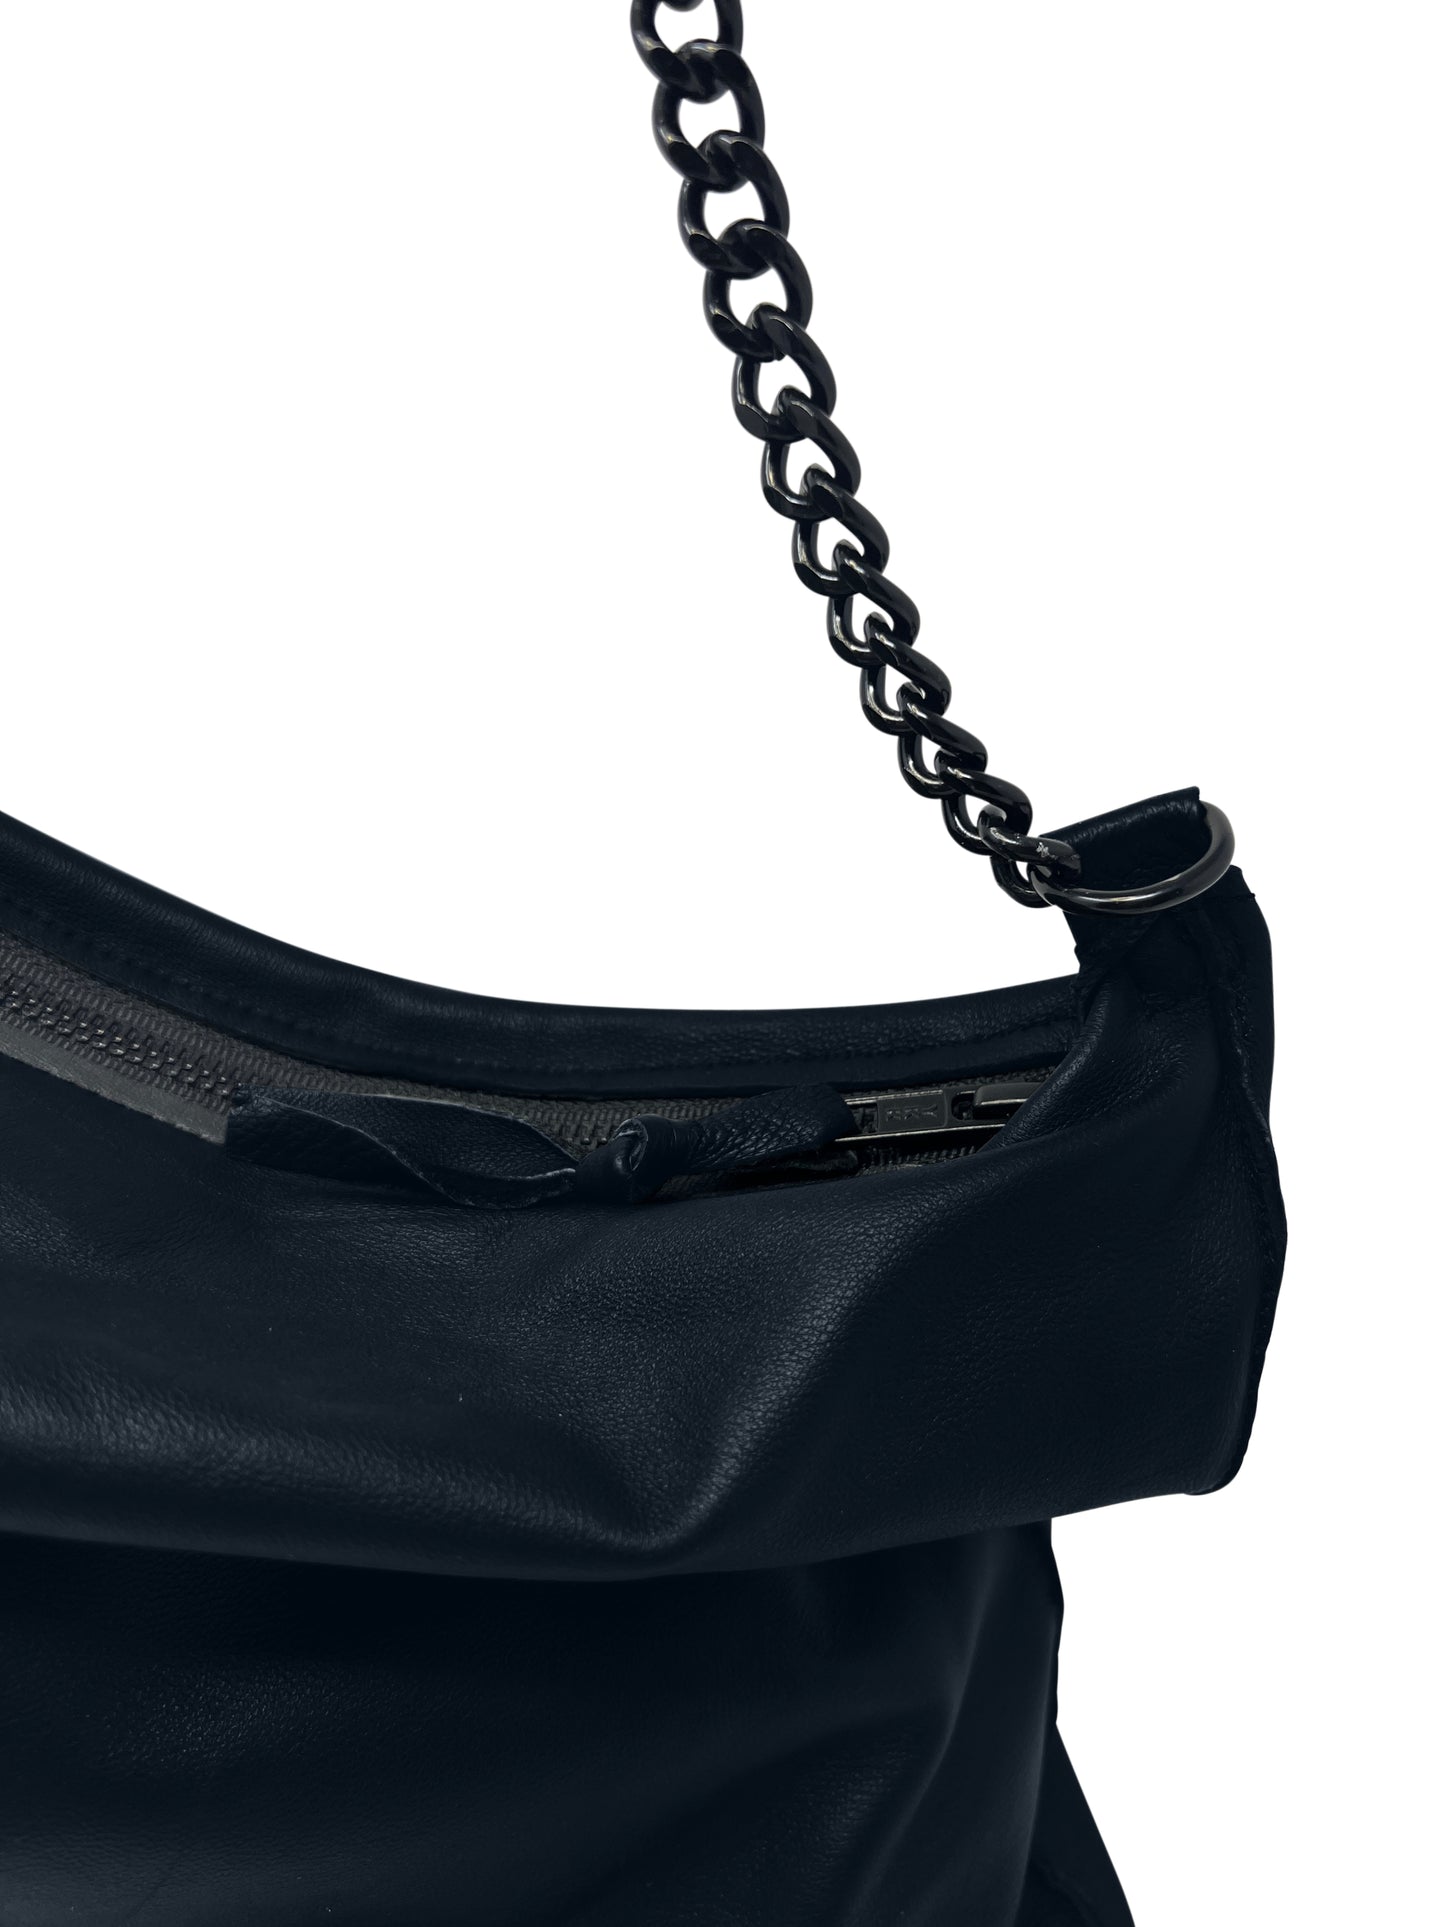 Chain Bag